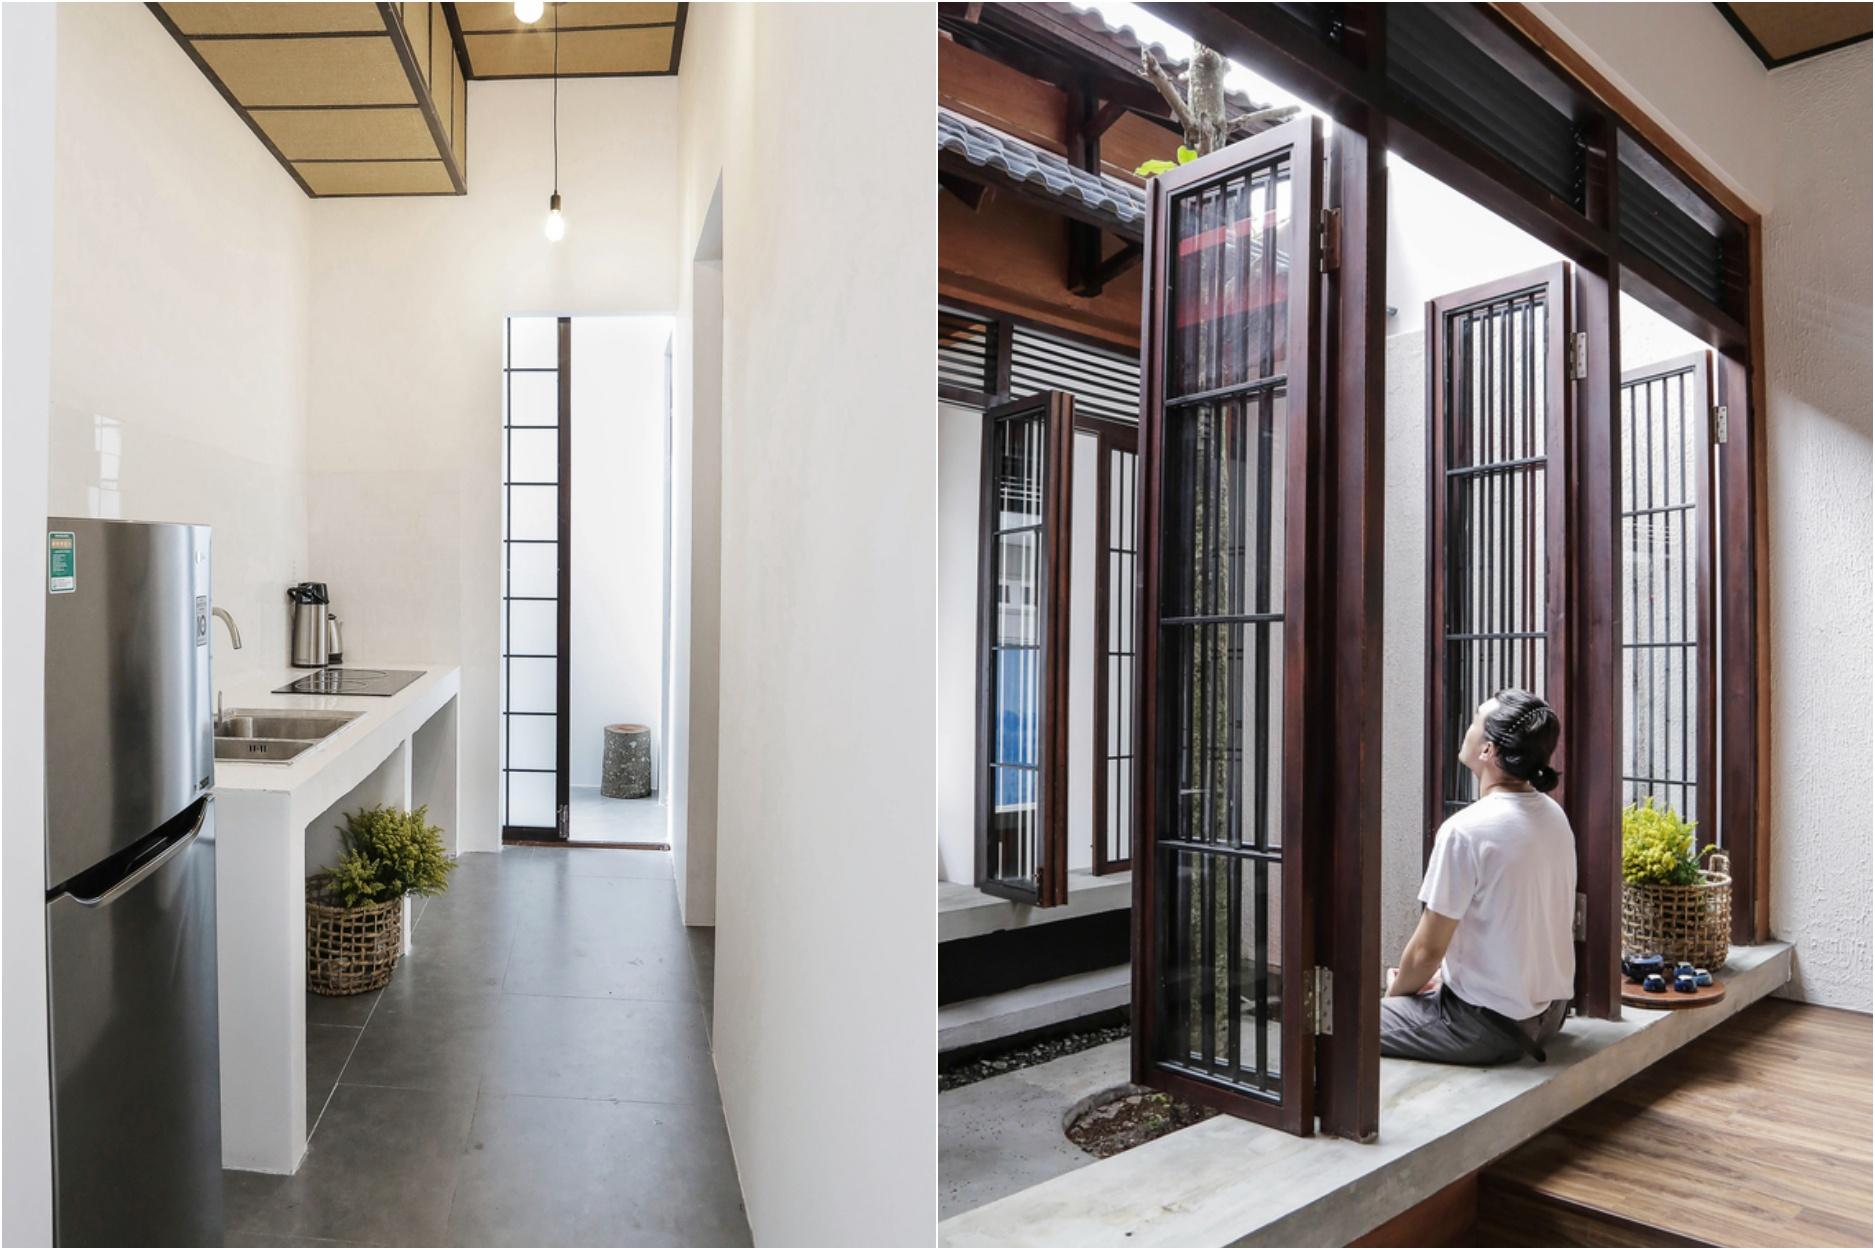 This 970sqft Vietnam Home Exudes Japanese Serenity